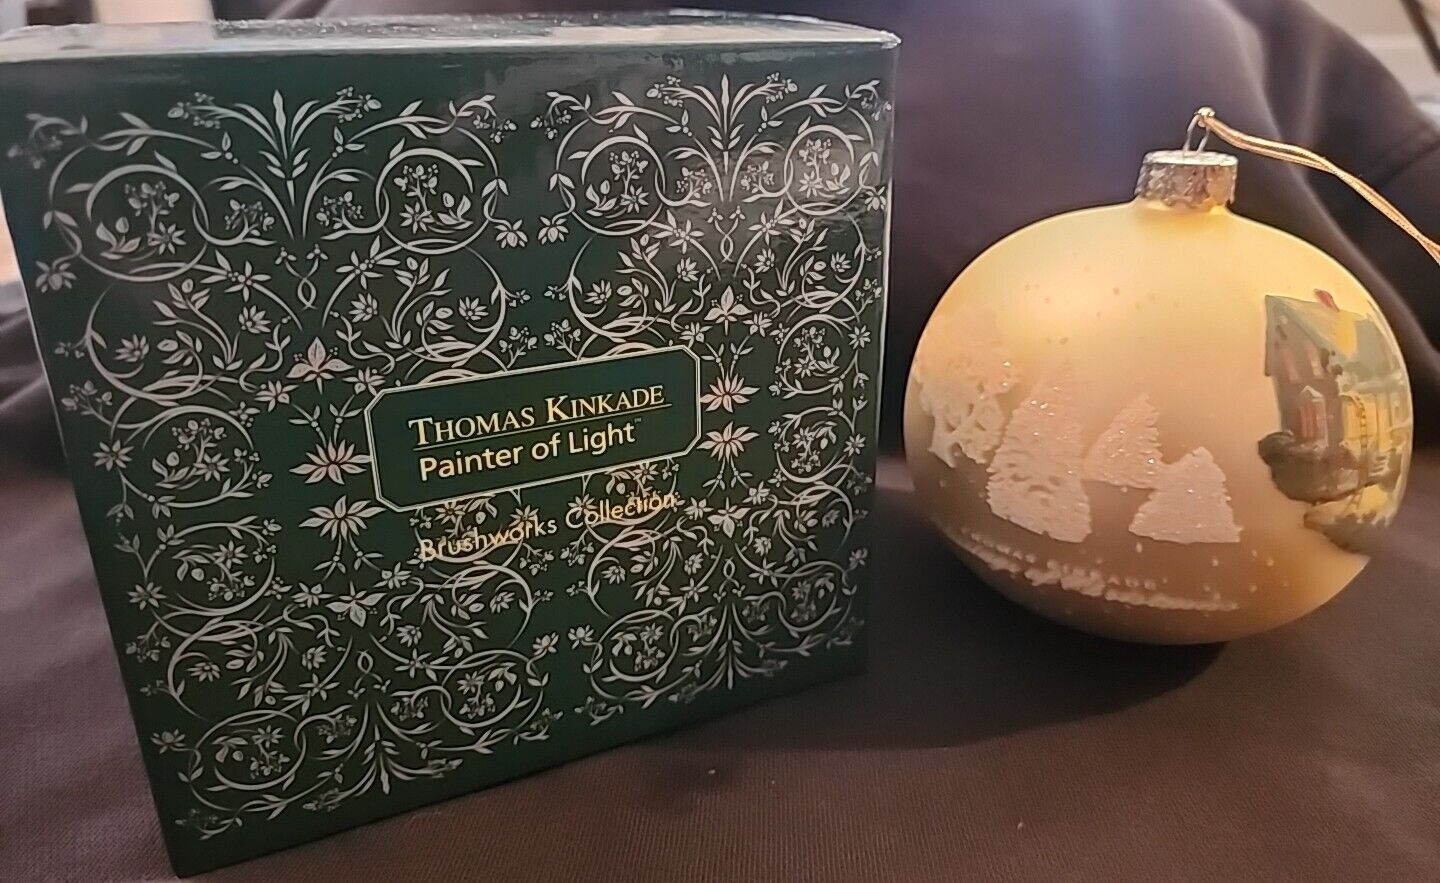 2003 Thomas Kinkade Brushworks Collection Blessings of Christmas Ornament